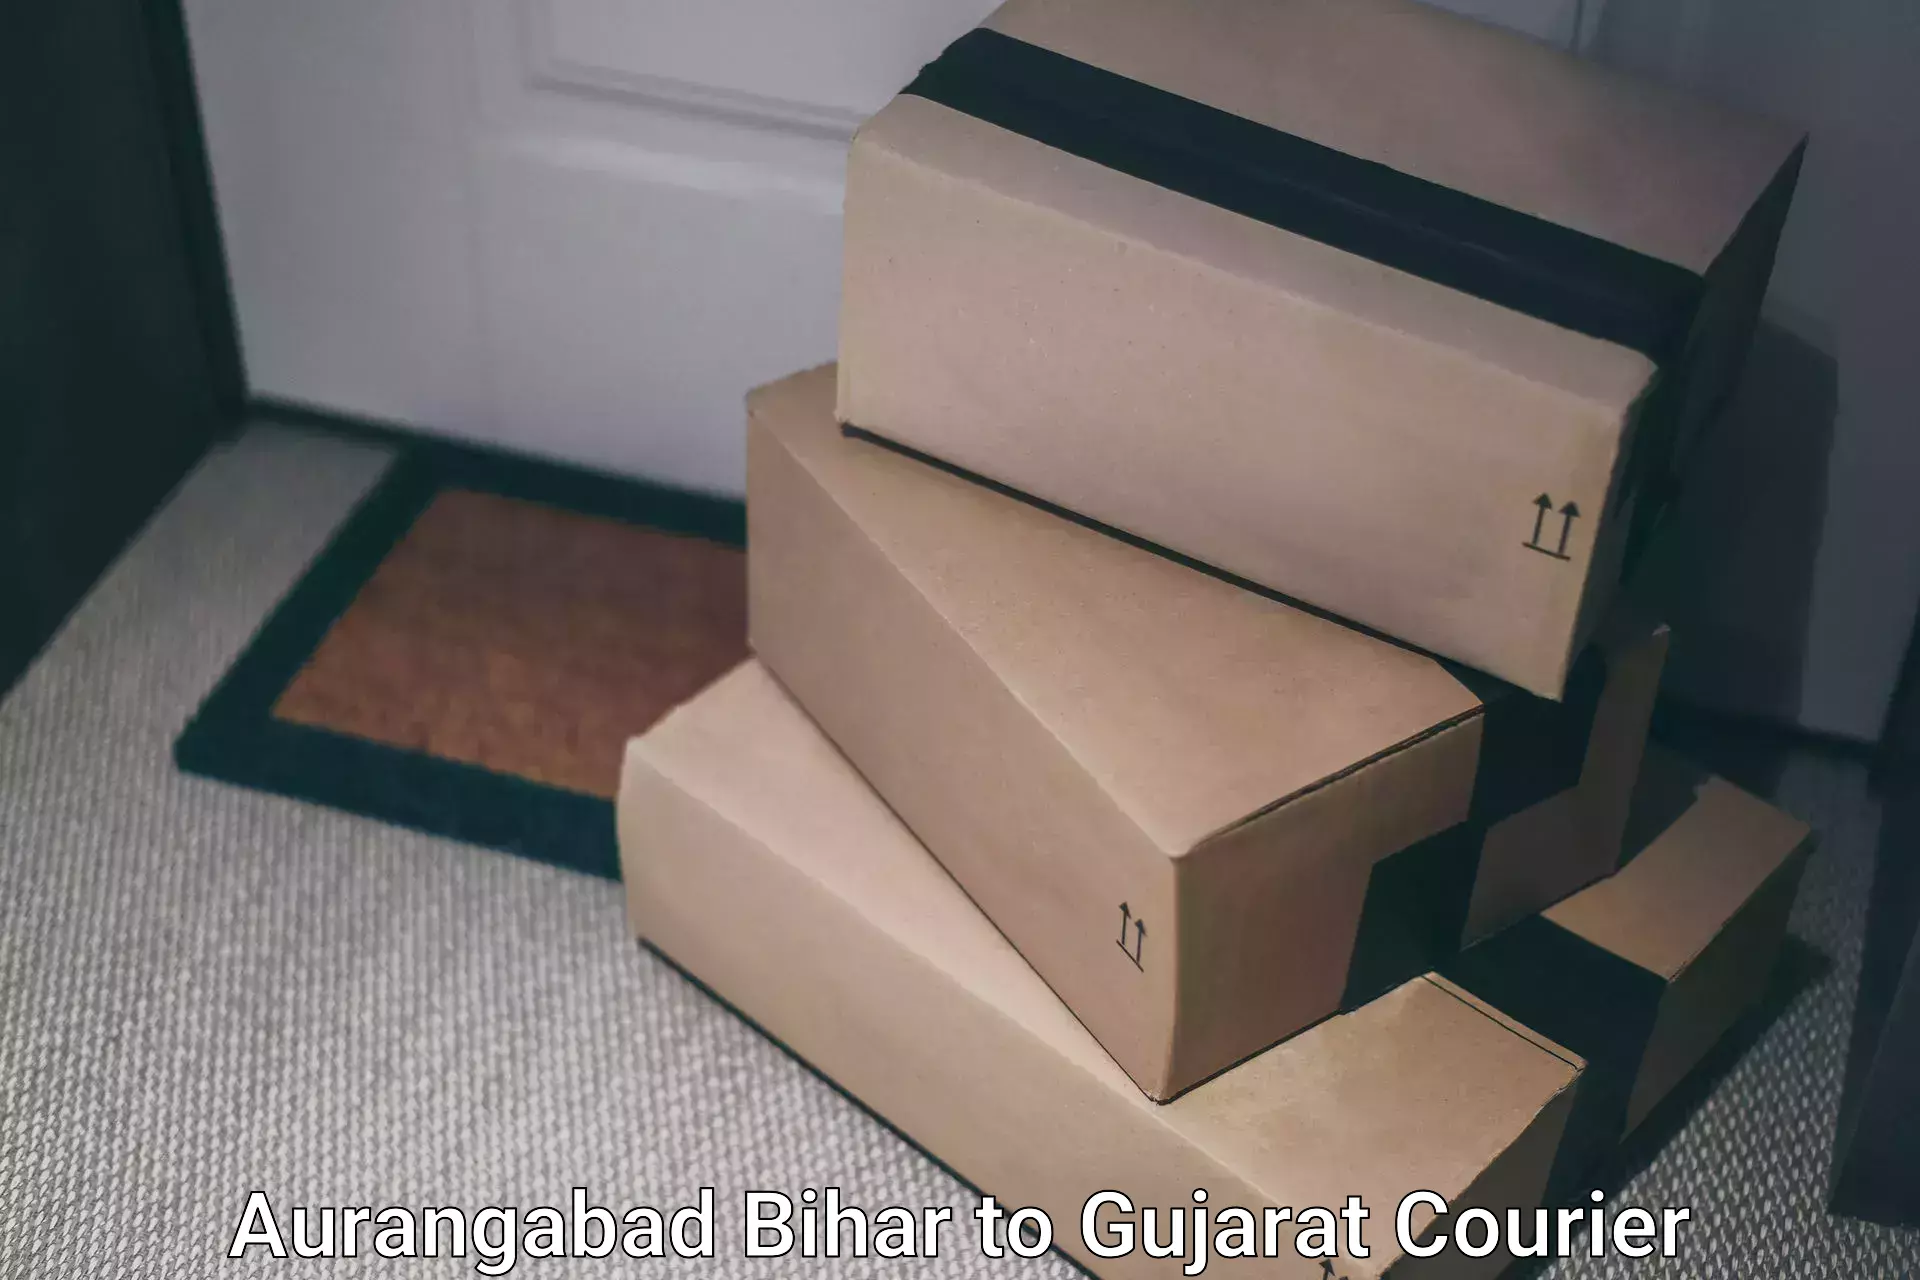 Fast delivery service Aurangabad Bihar to Dharmaram